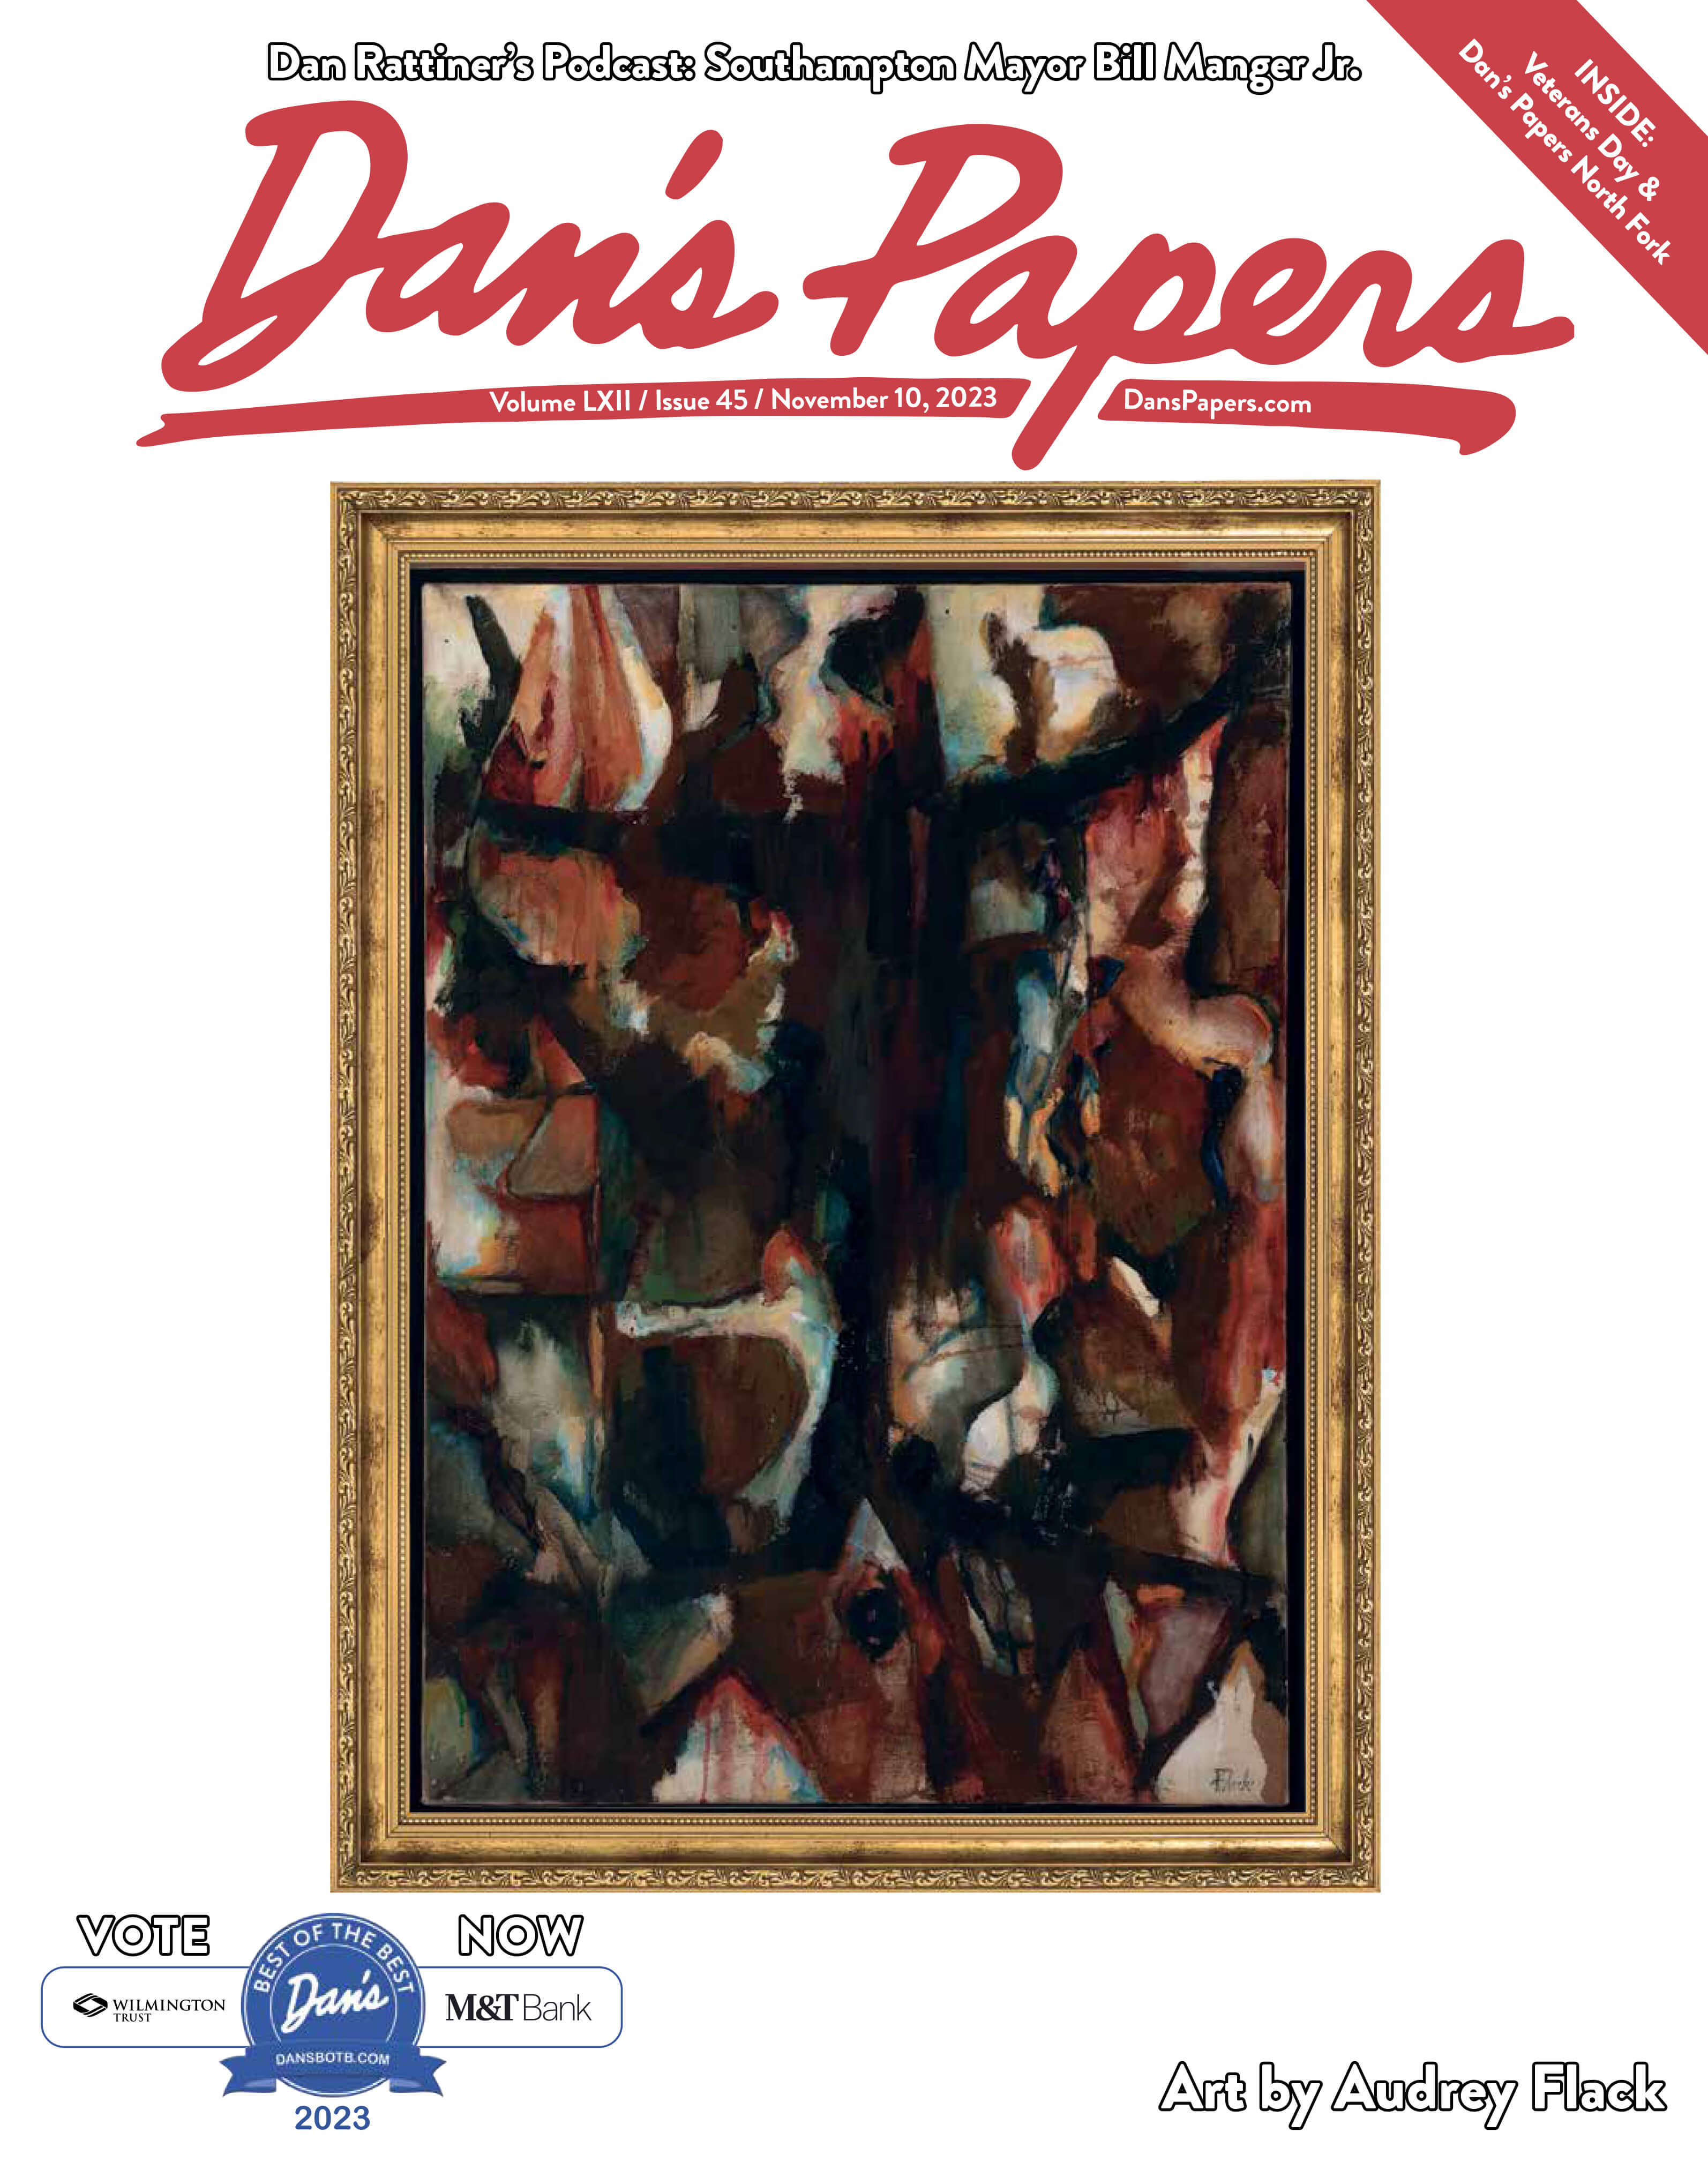 November 10 Dan's Papers cover art "Explorer" by Audrey Flack